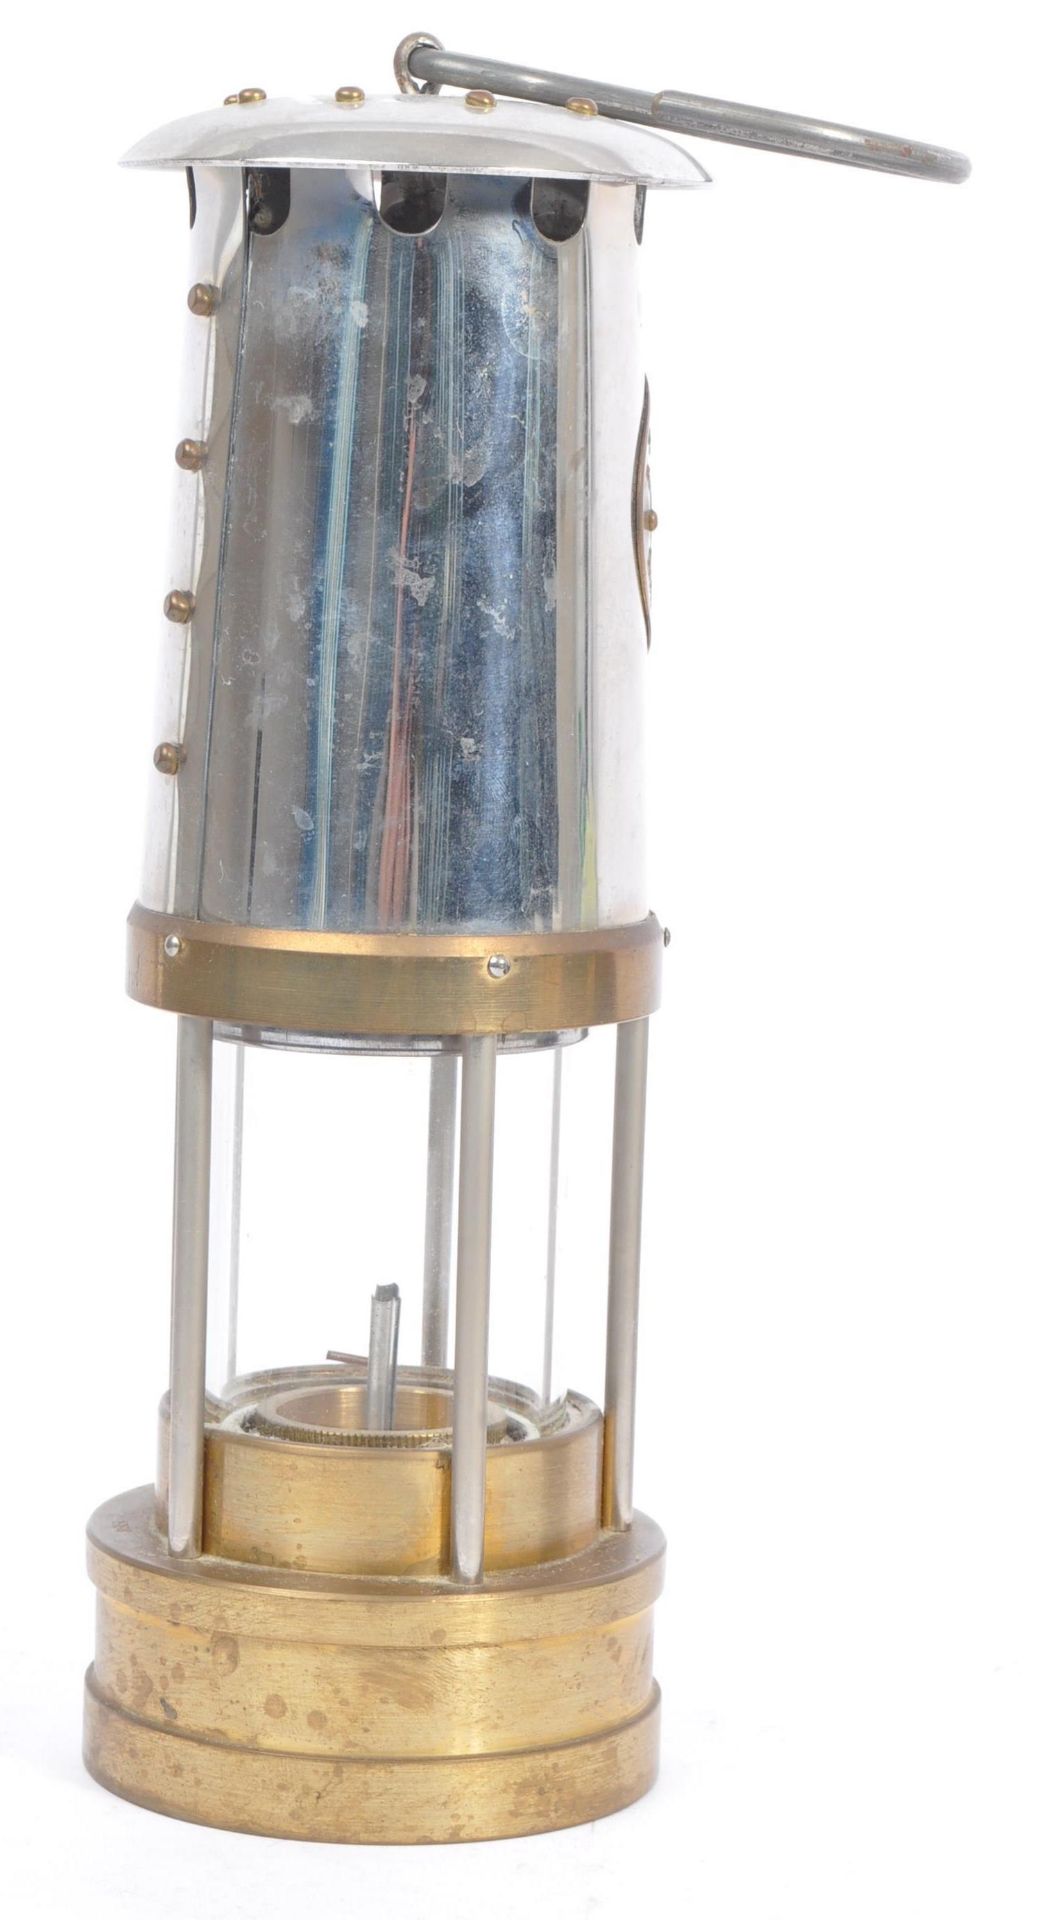 ORIGINAL VINTAGE MINERS FLAME SAFETY LAMP LIGHT UNUSED - Image 3 of 7